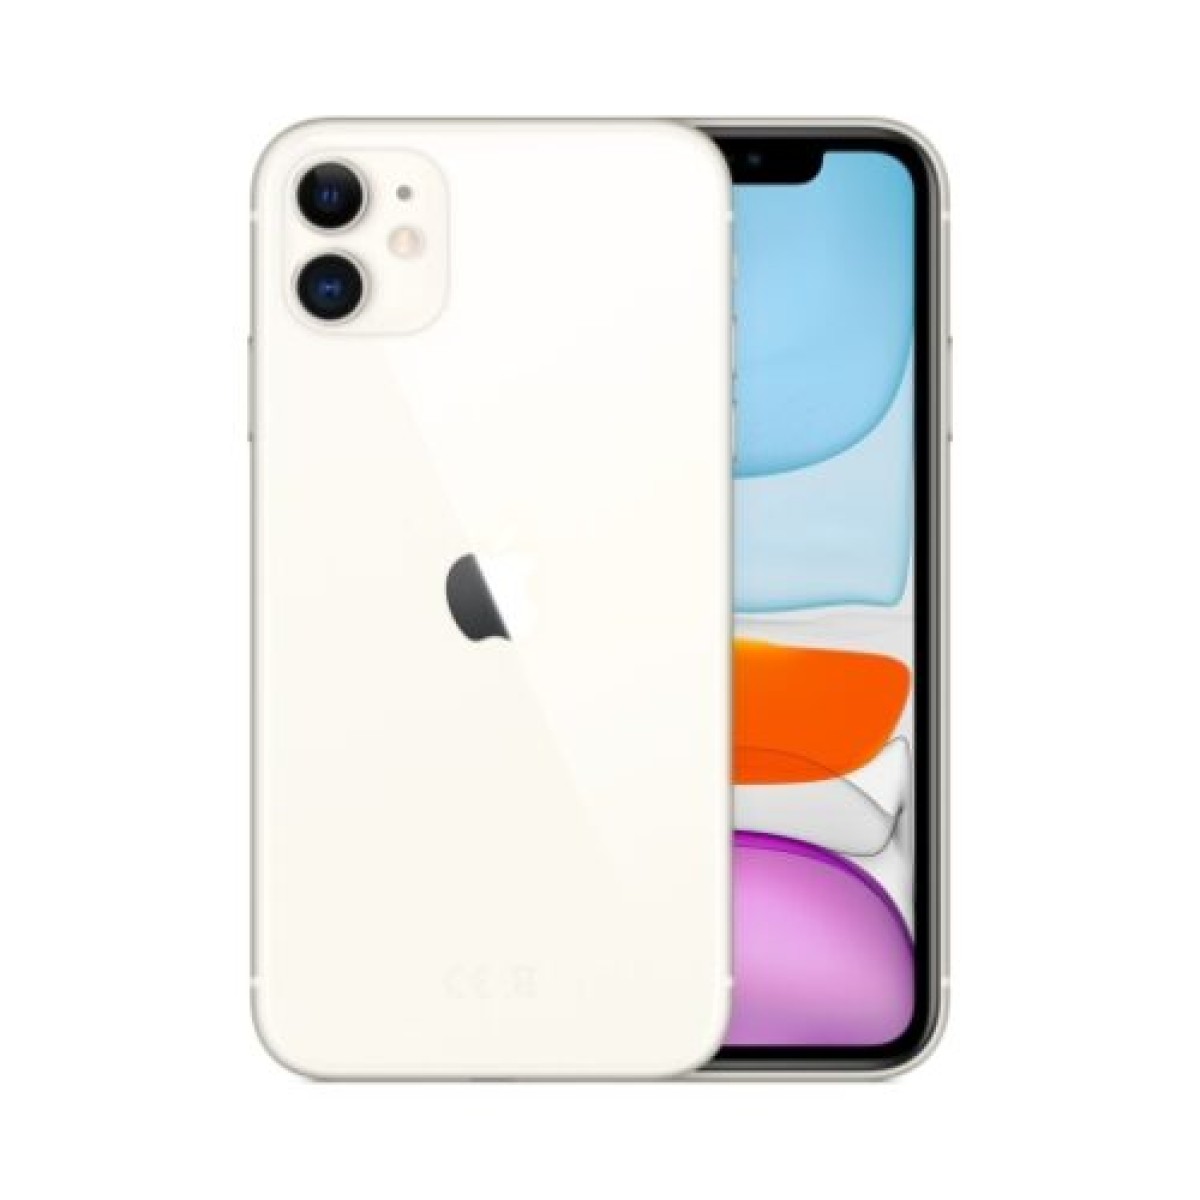 Apple iPhone 11 4G 64GB (4GB Ram) Single-Sim White EU